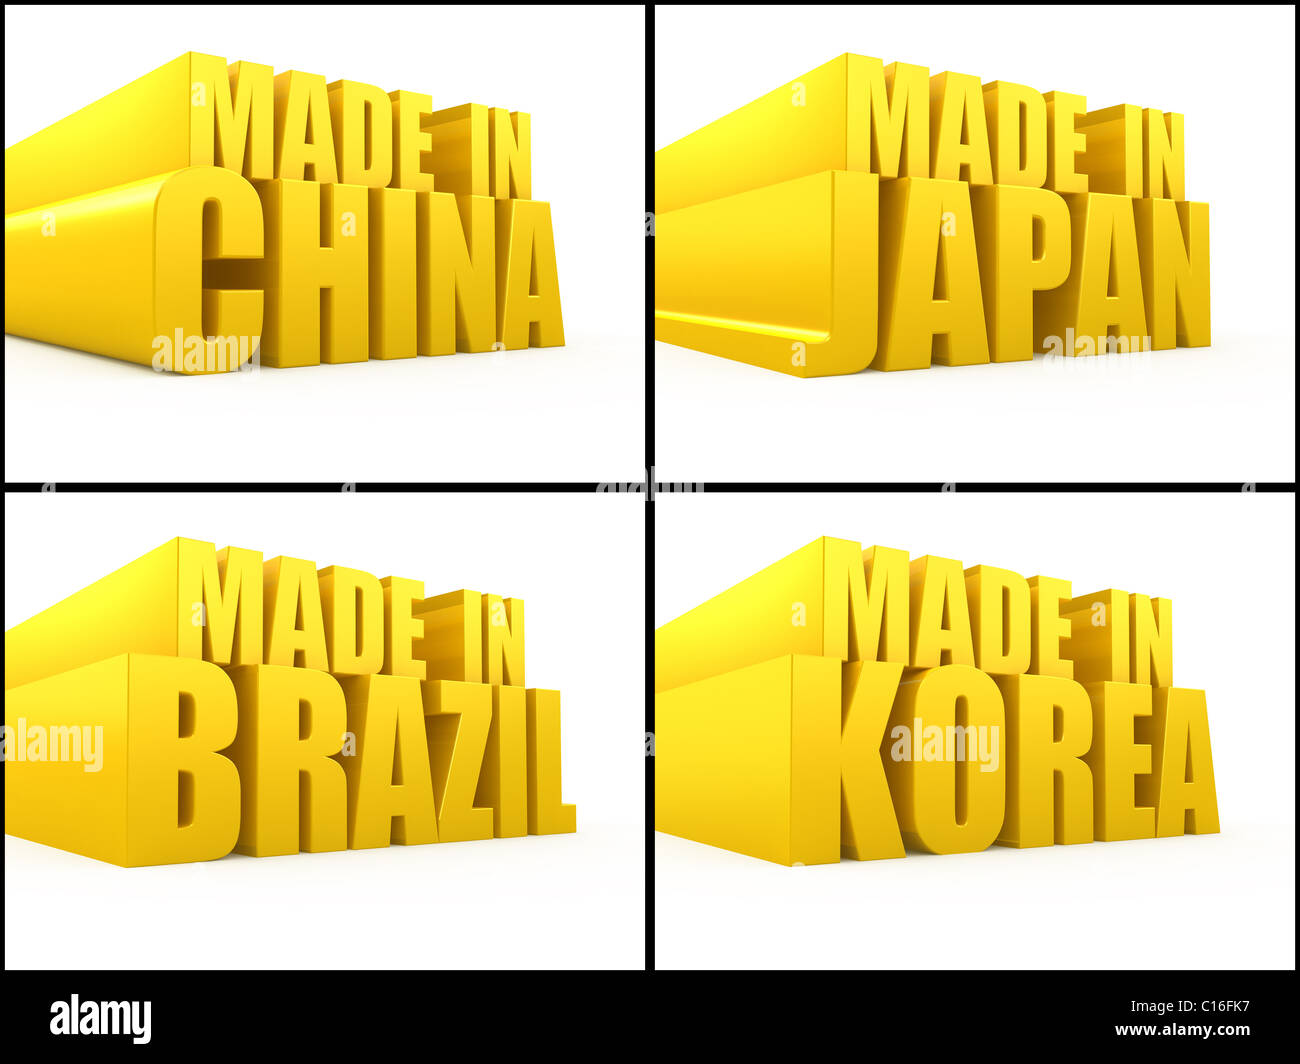 Made in Korea, China, Japan, Brazil set Stock Photo